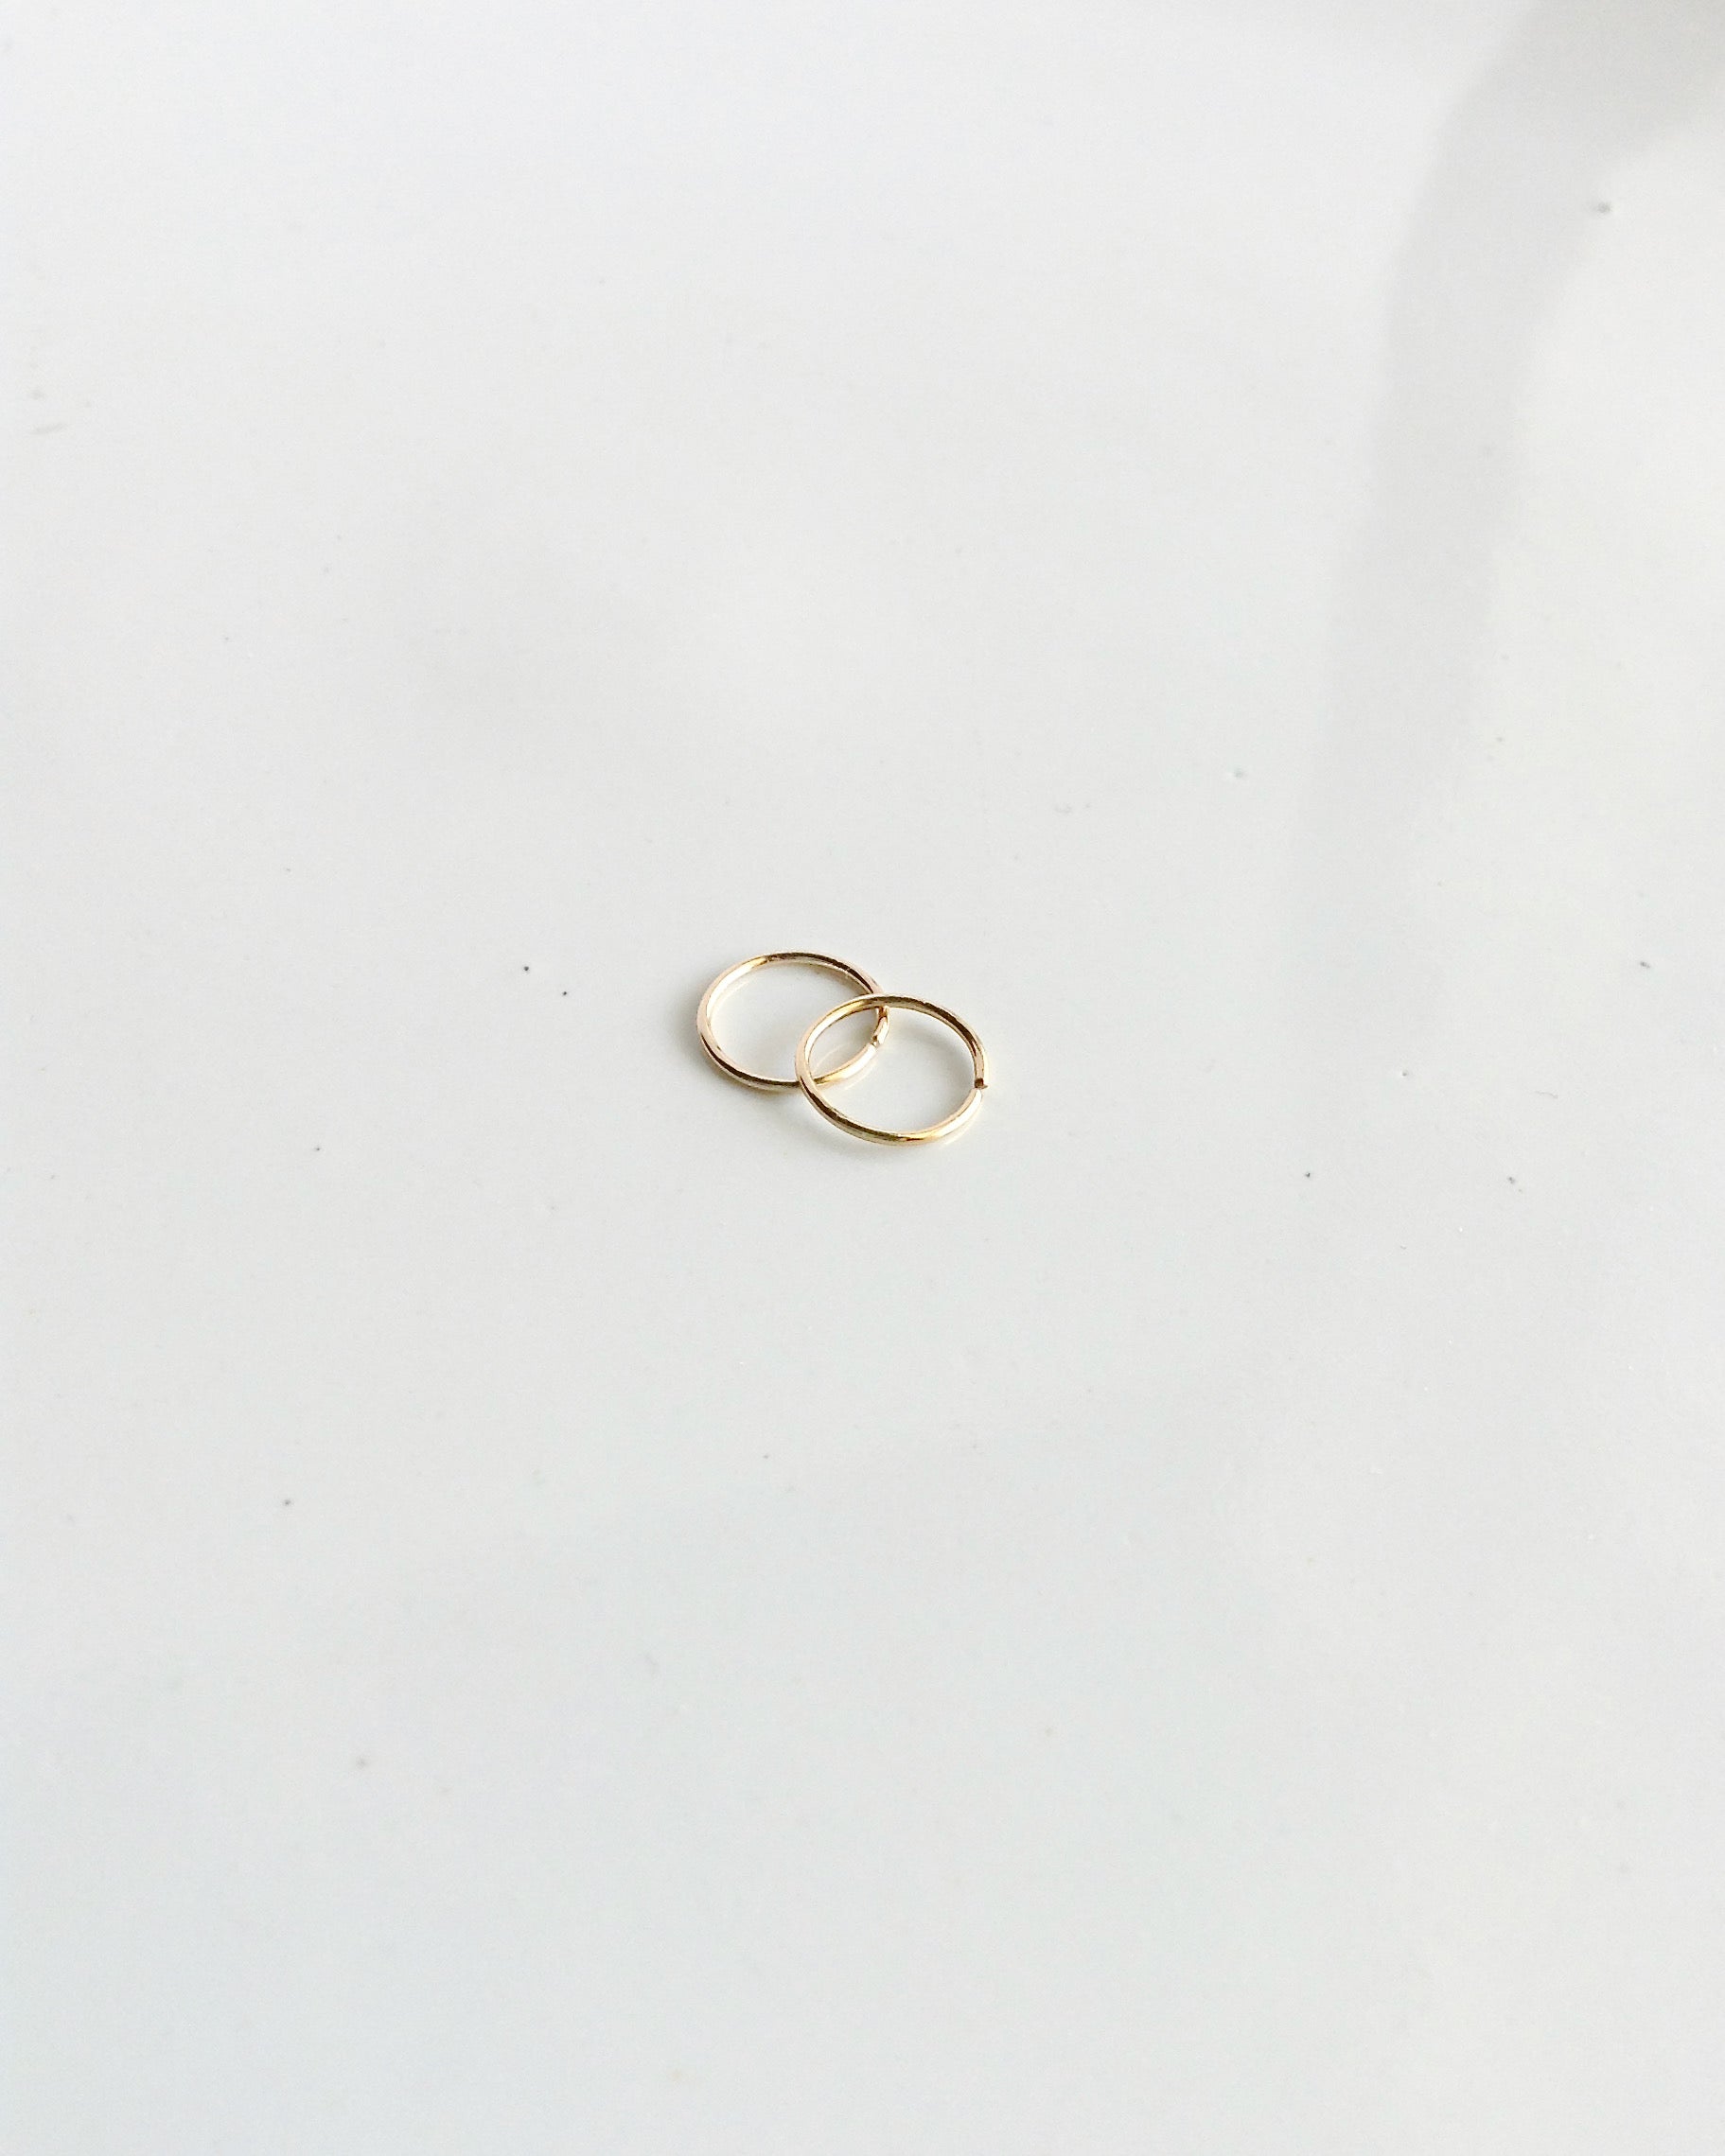 Mini Huggie Hoops in Gold Filled or Sterling Silver | Simple Everyday Earrings | IB Jewelry